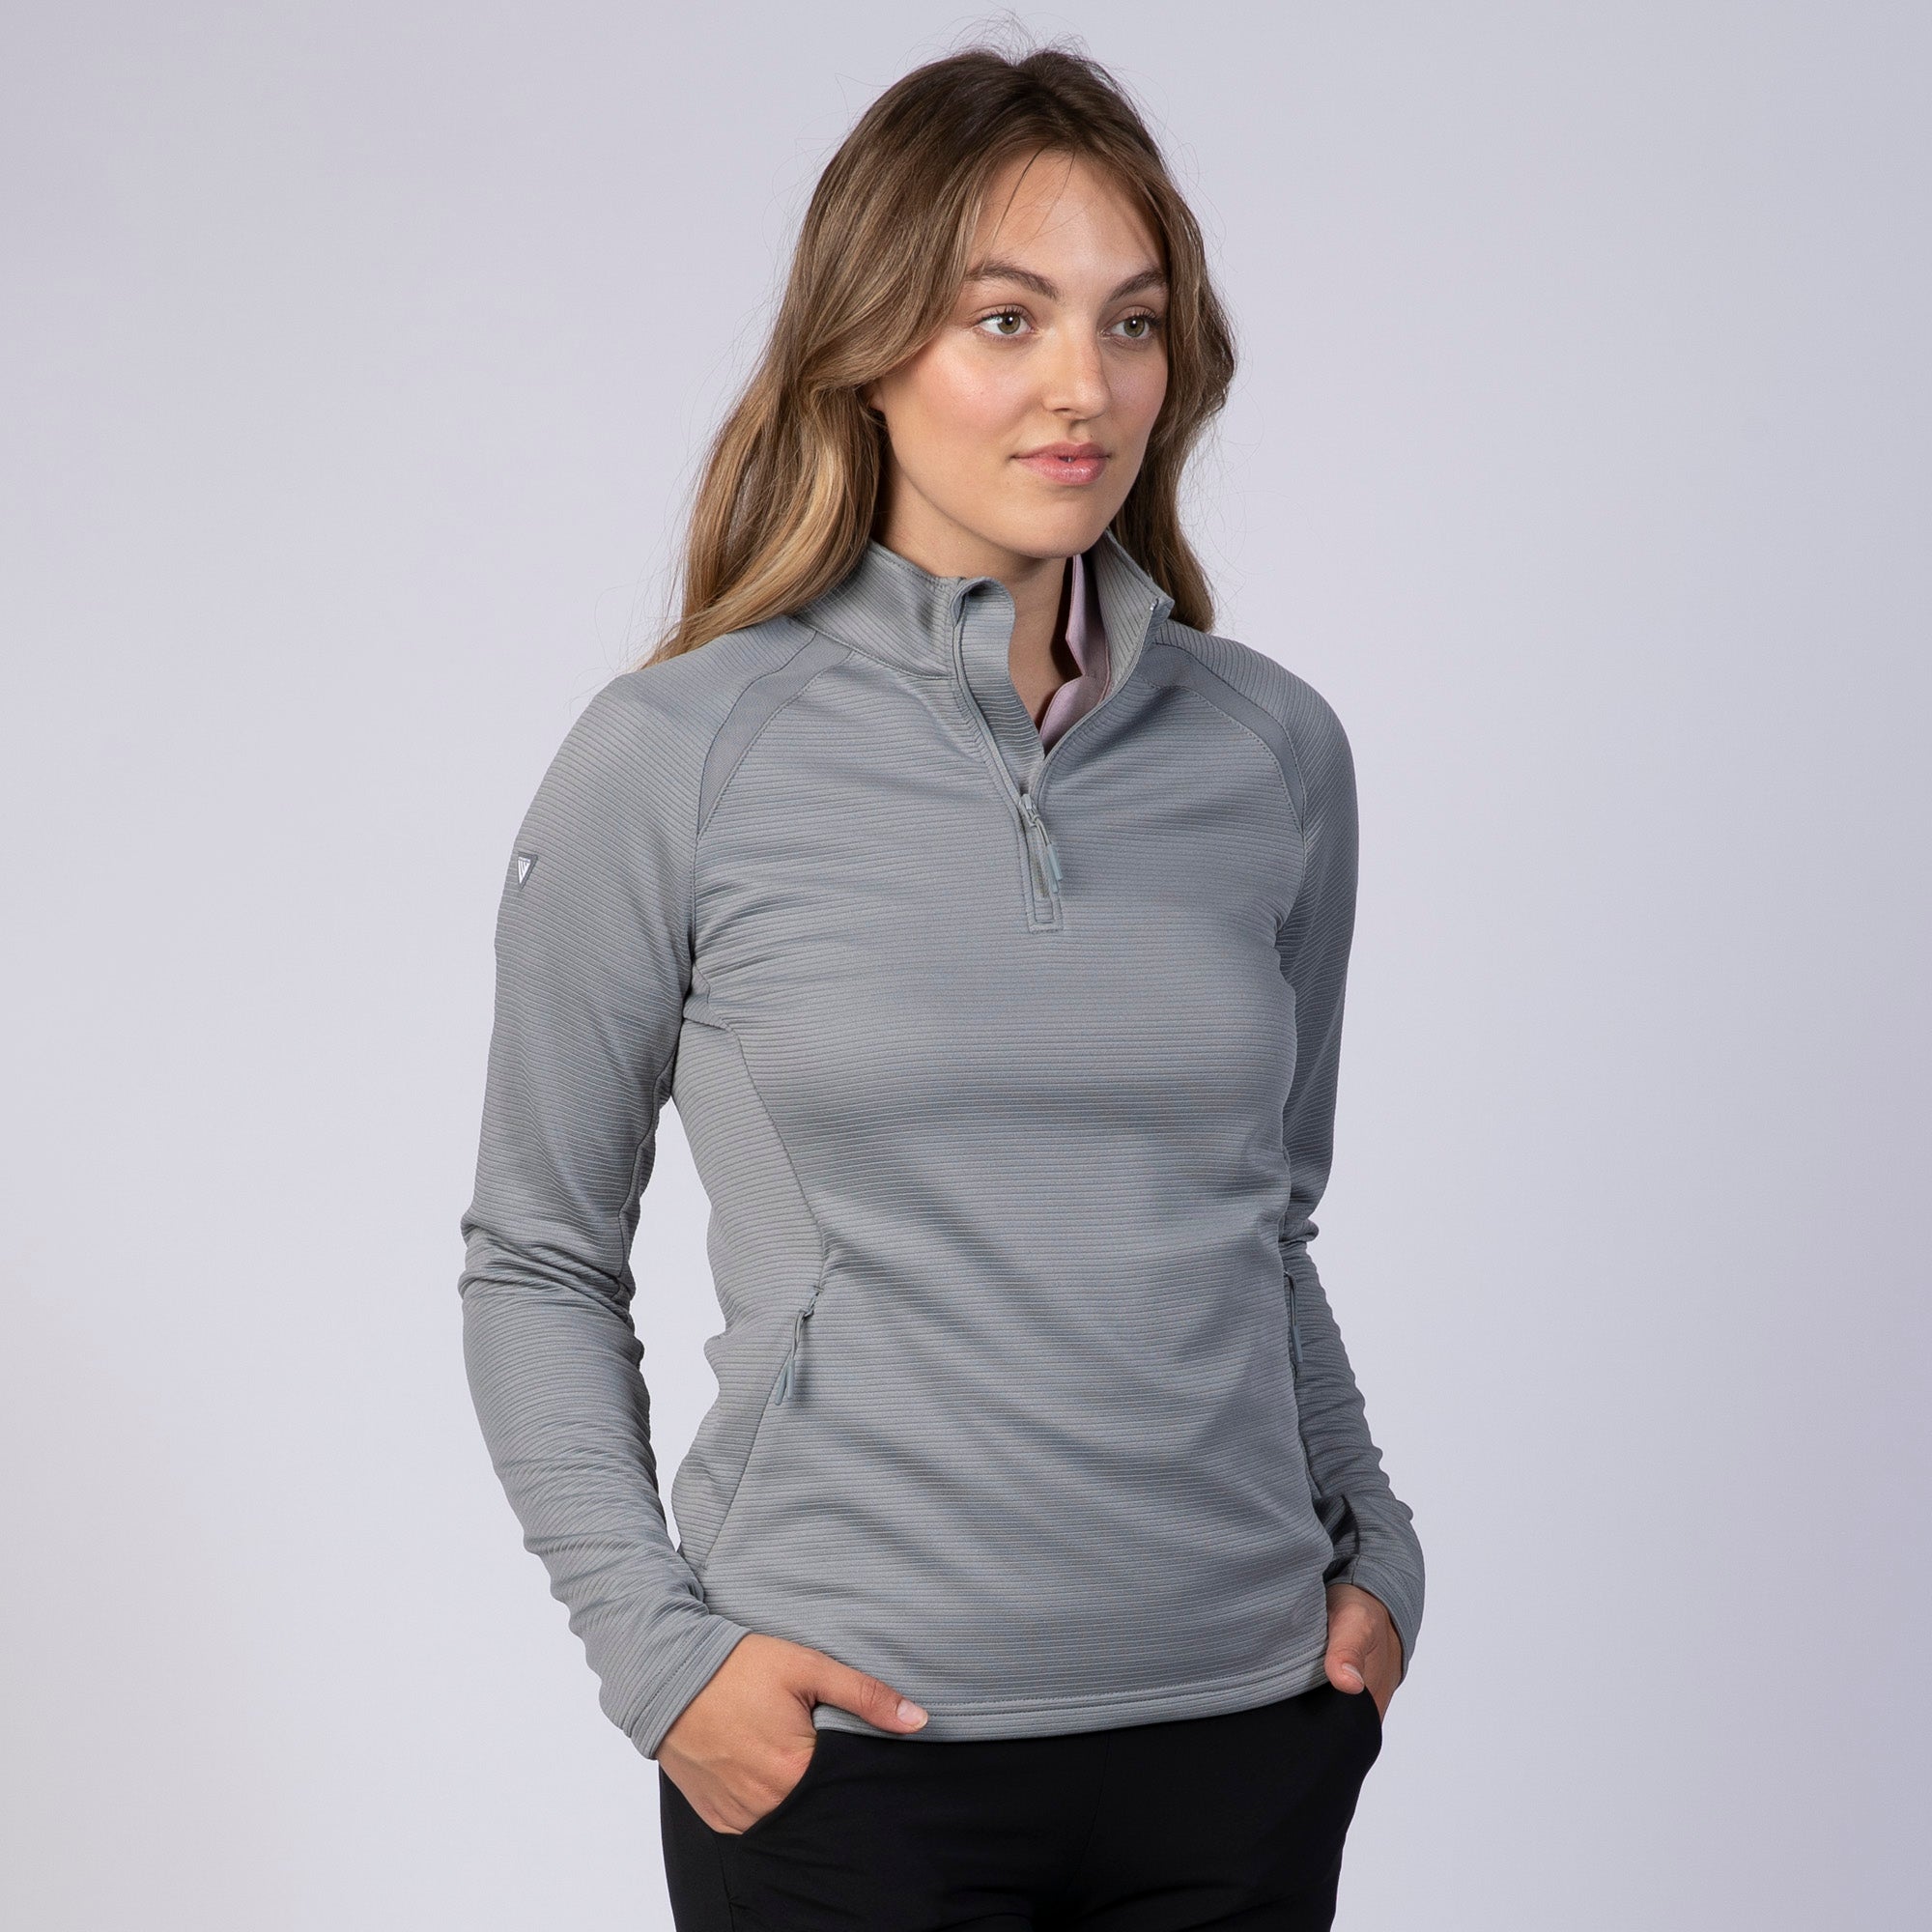 Levelwear Paragon 1/4 Zip Pullover - Womens – Canadian Pro Shop Online